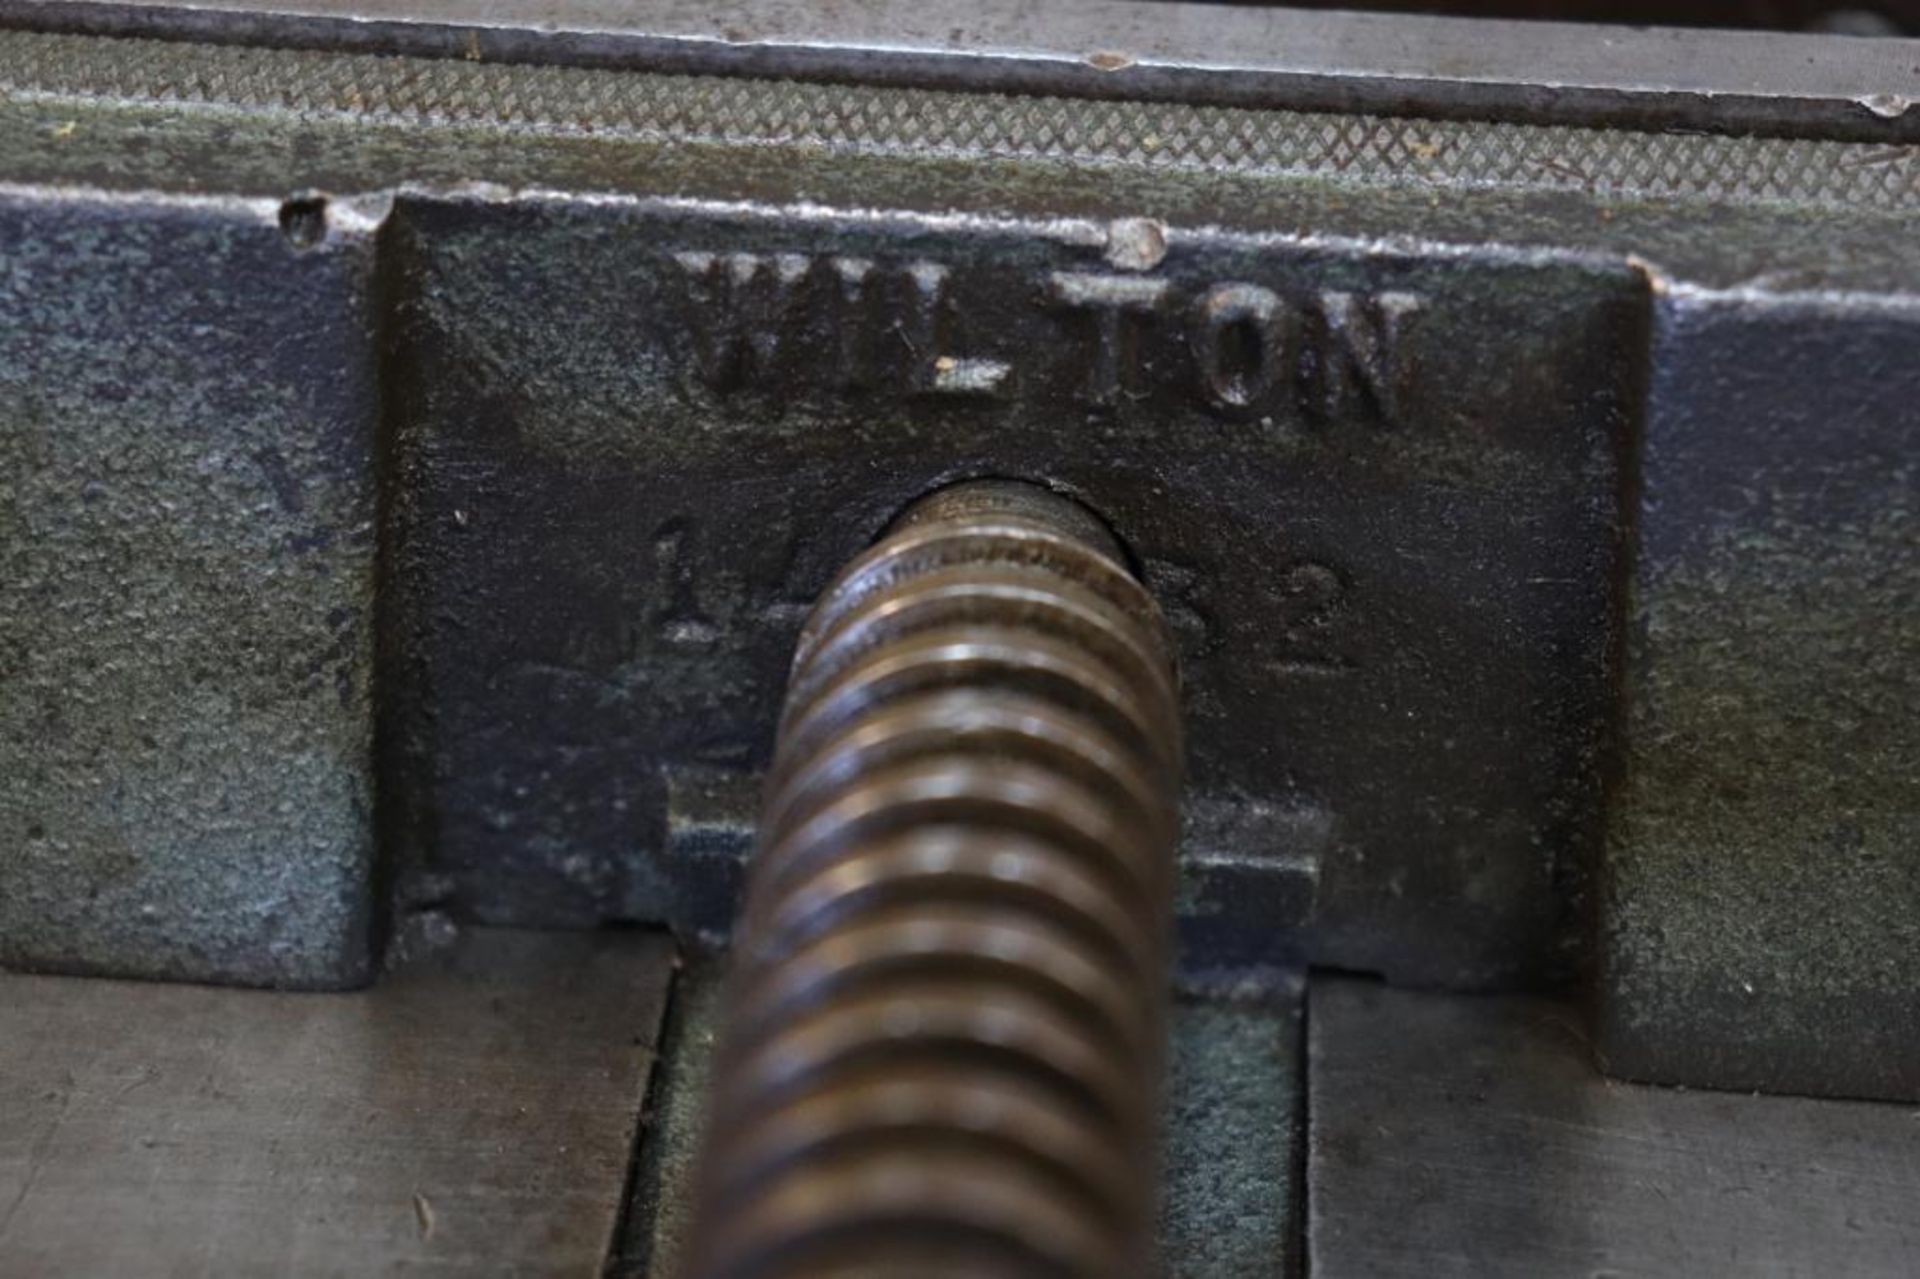 Wilton 6" drill press vise - Image 4 of 4